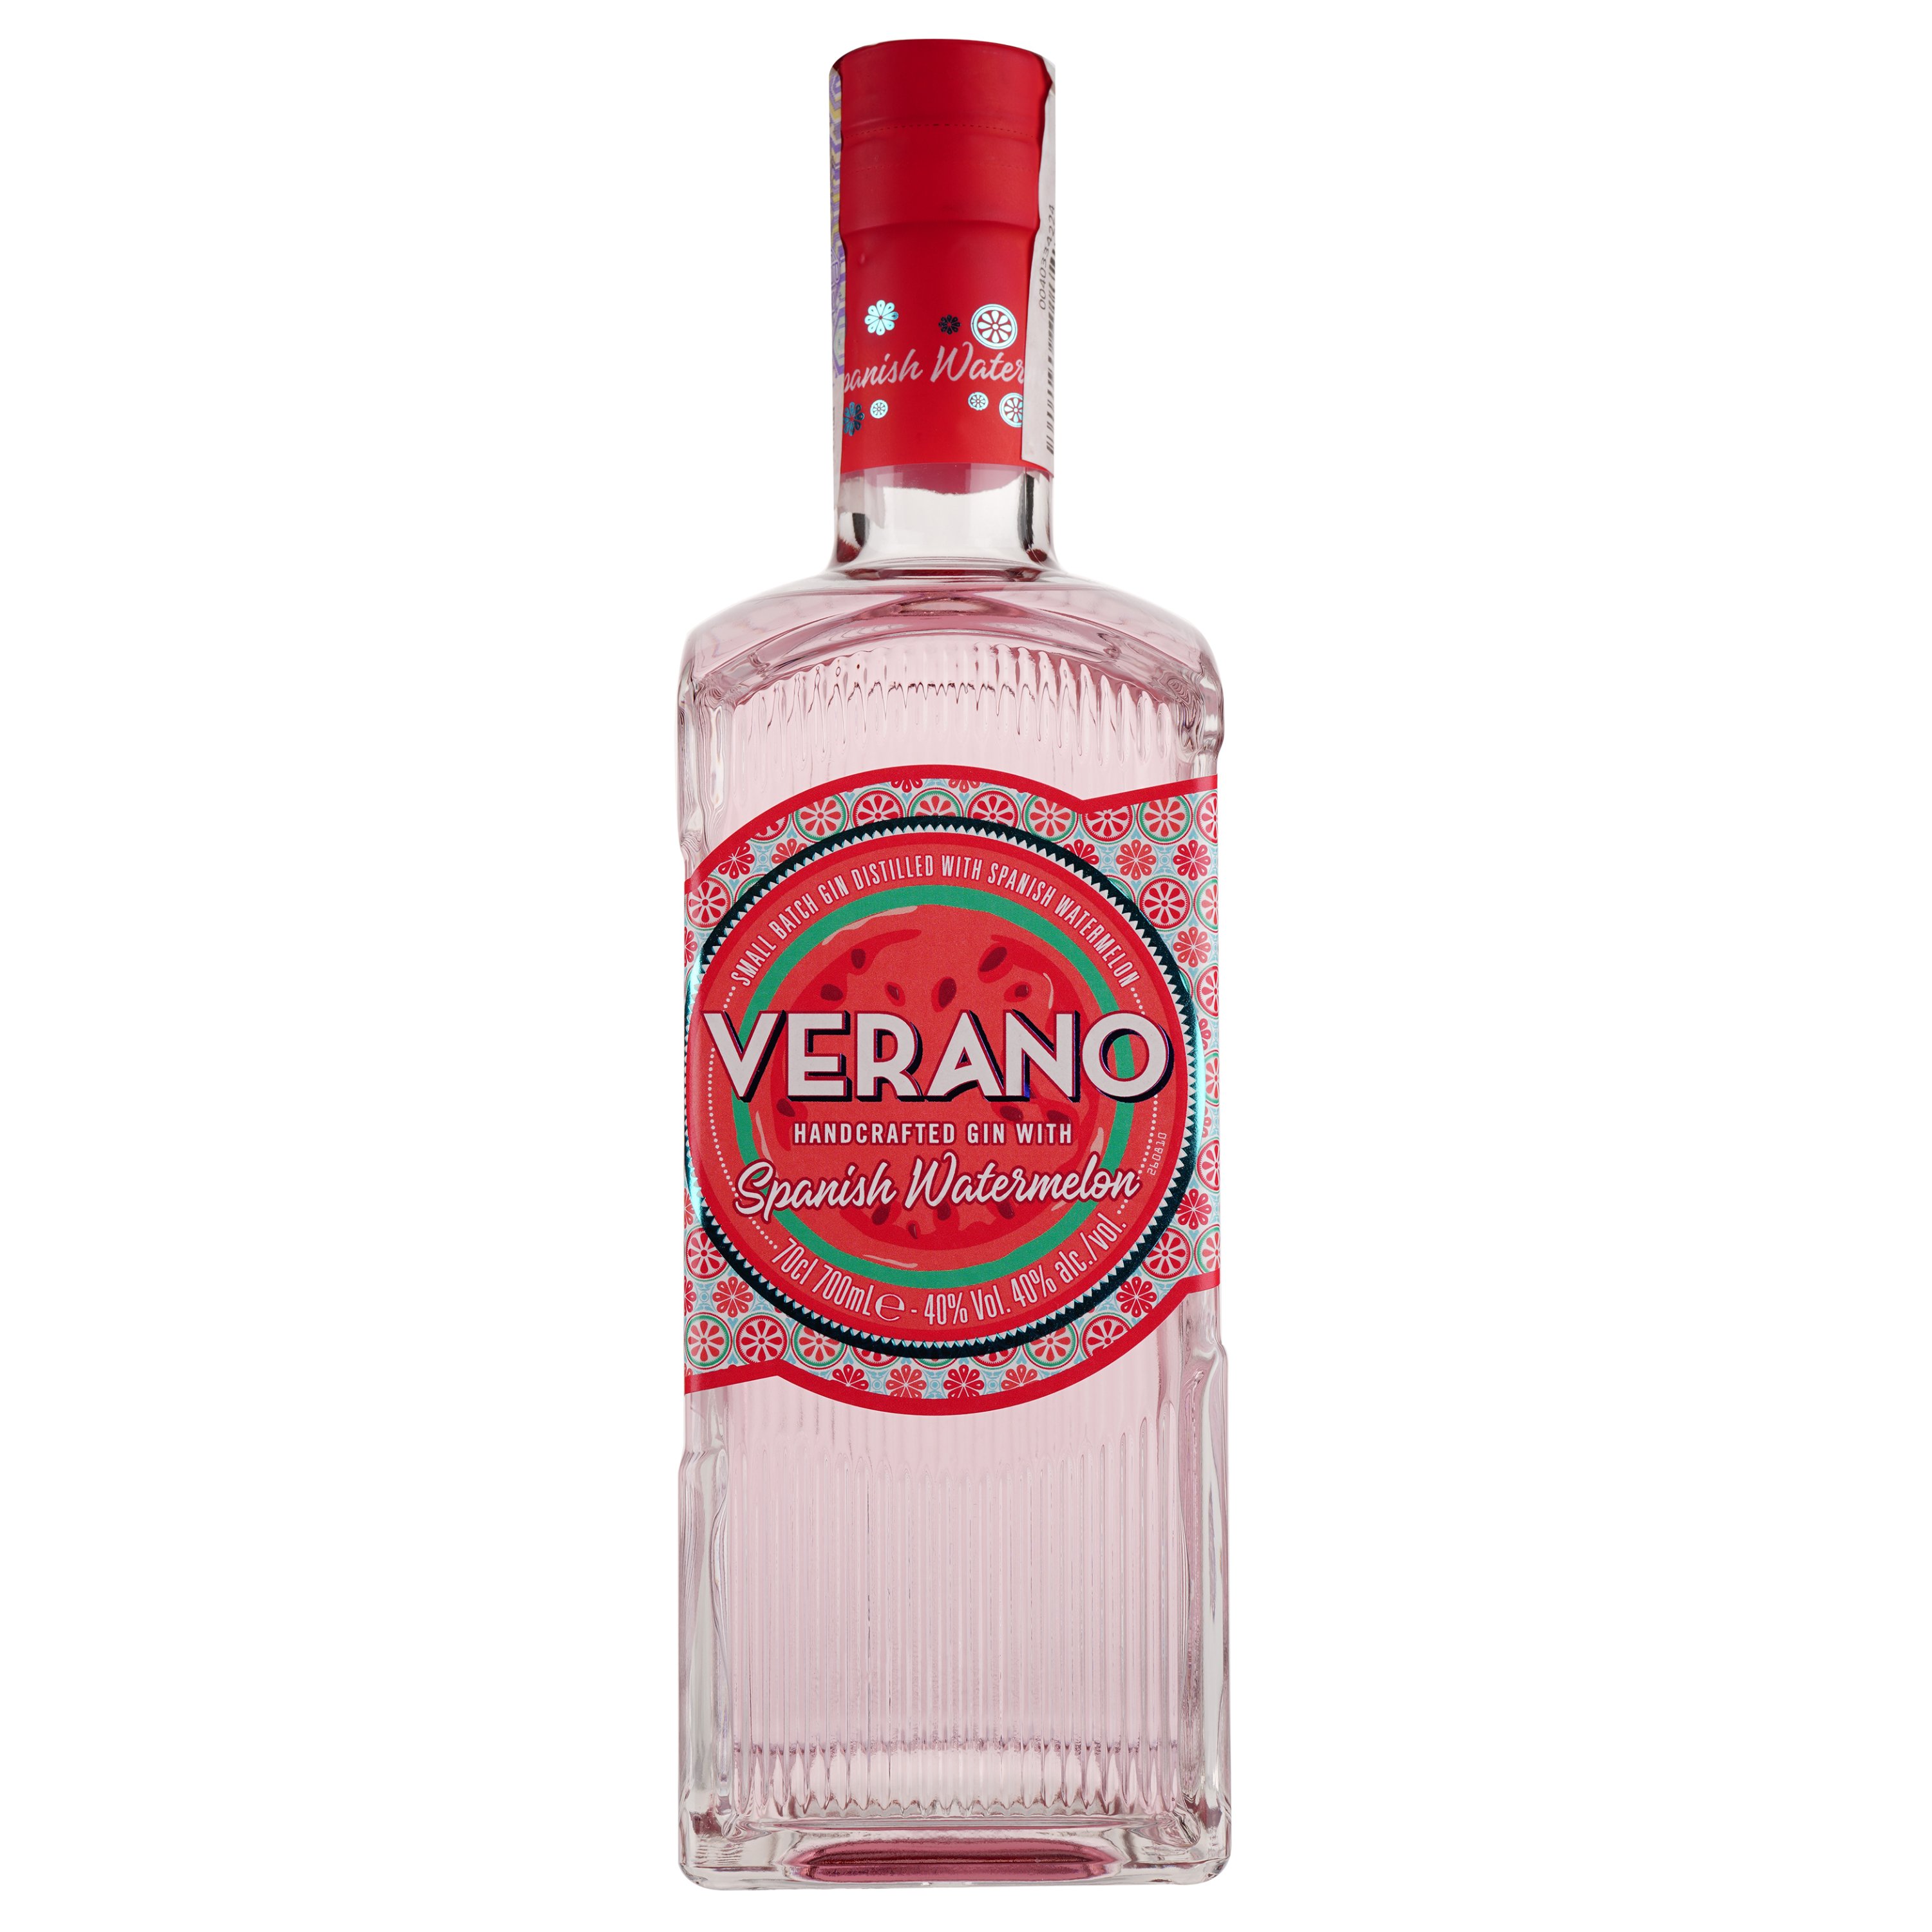 Джин Verano Spanish Watermelon, 40 %, 0,7 л (874147) - фото 1